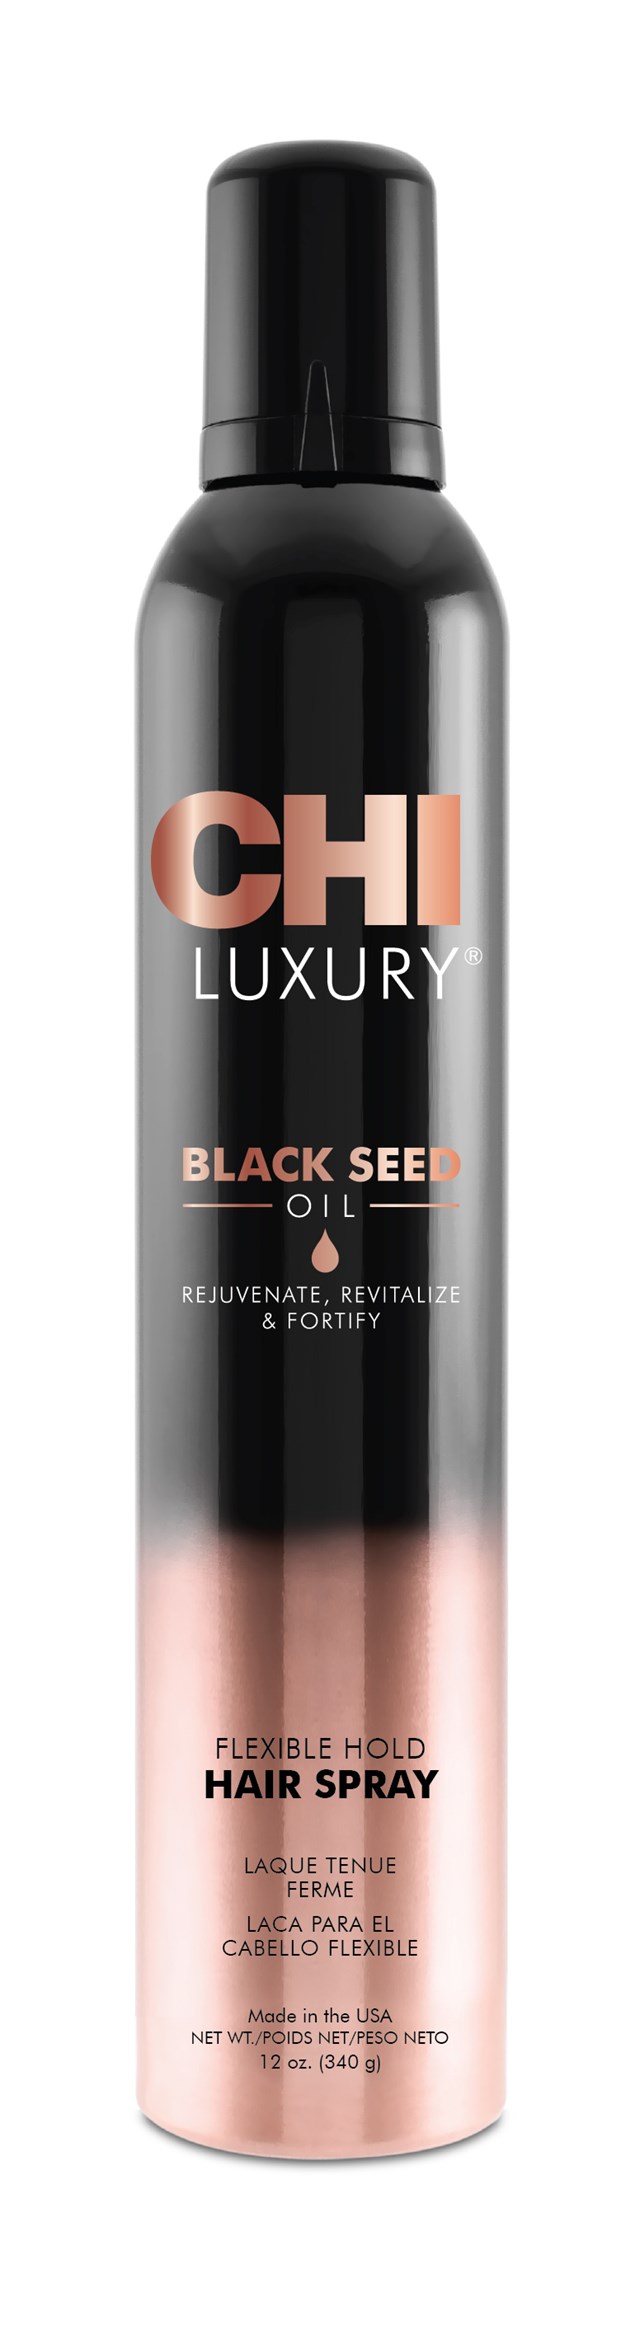 Luxury Black Seed Oil Flexible Hold Hair Spray